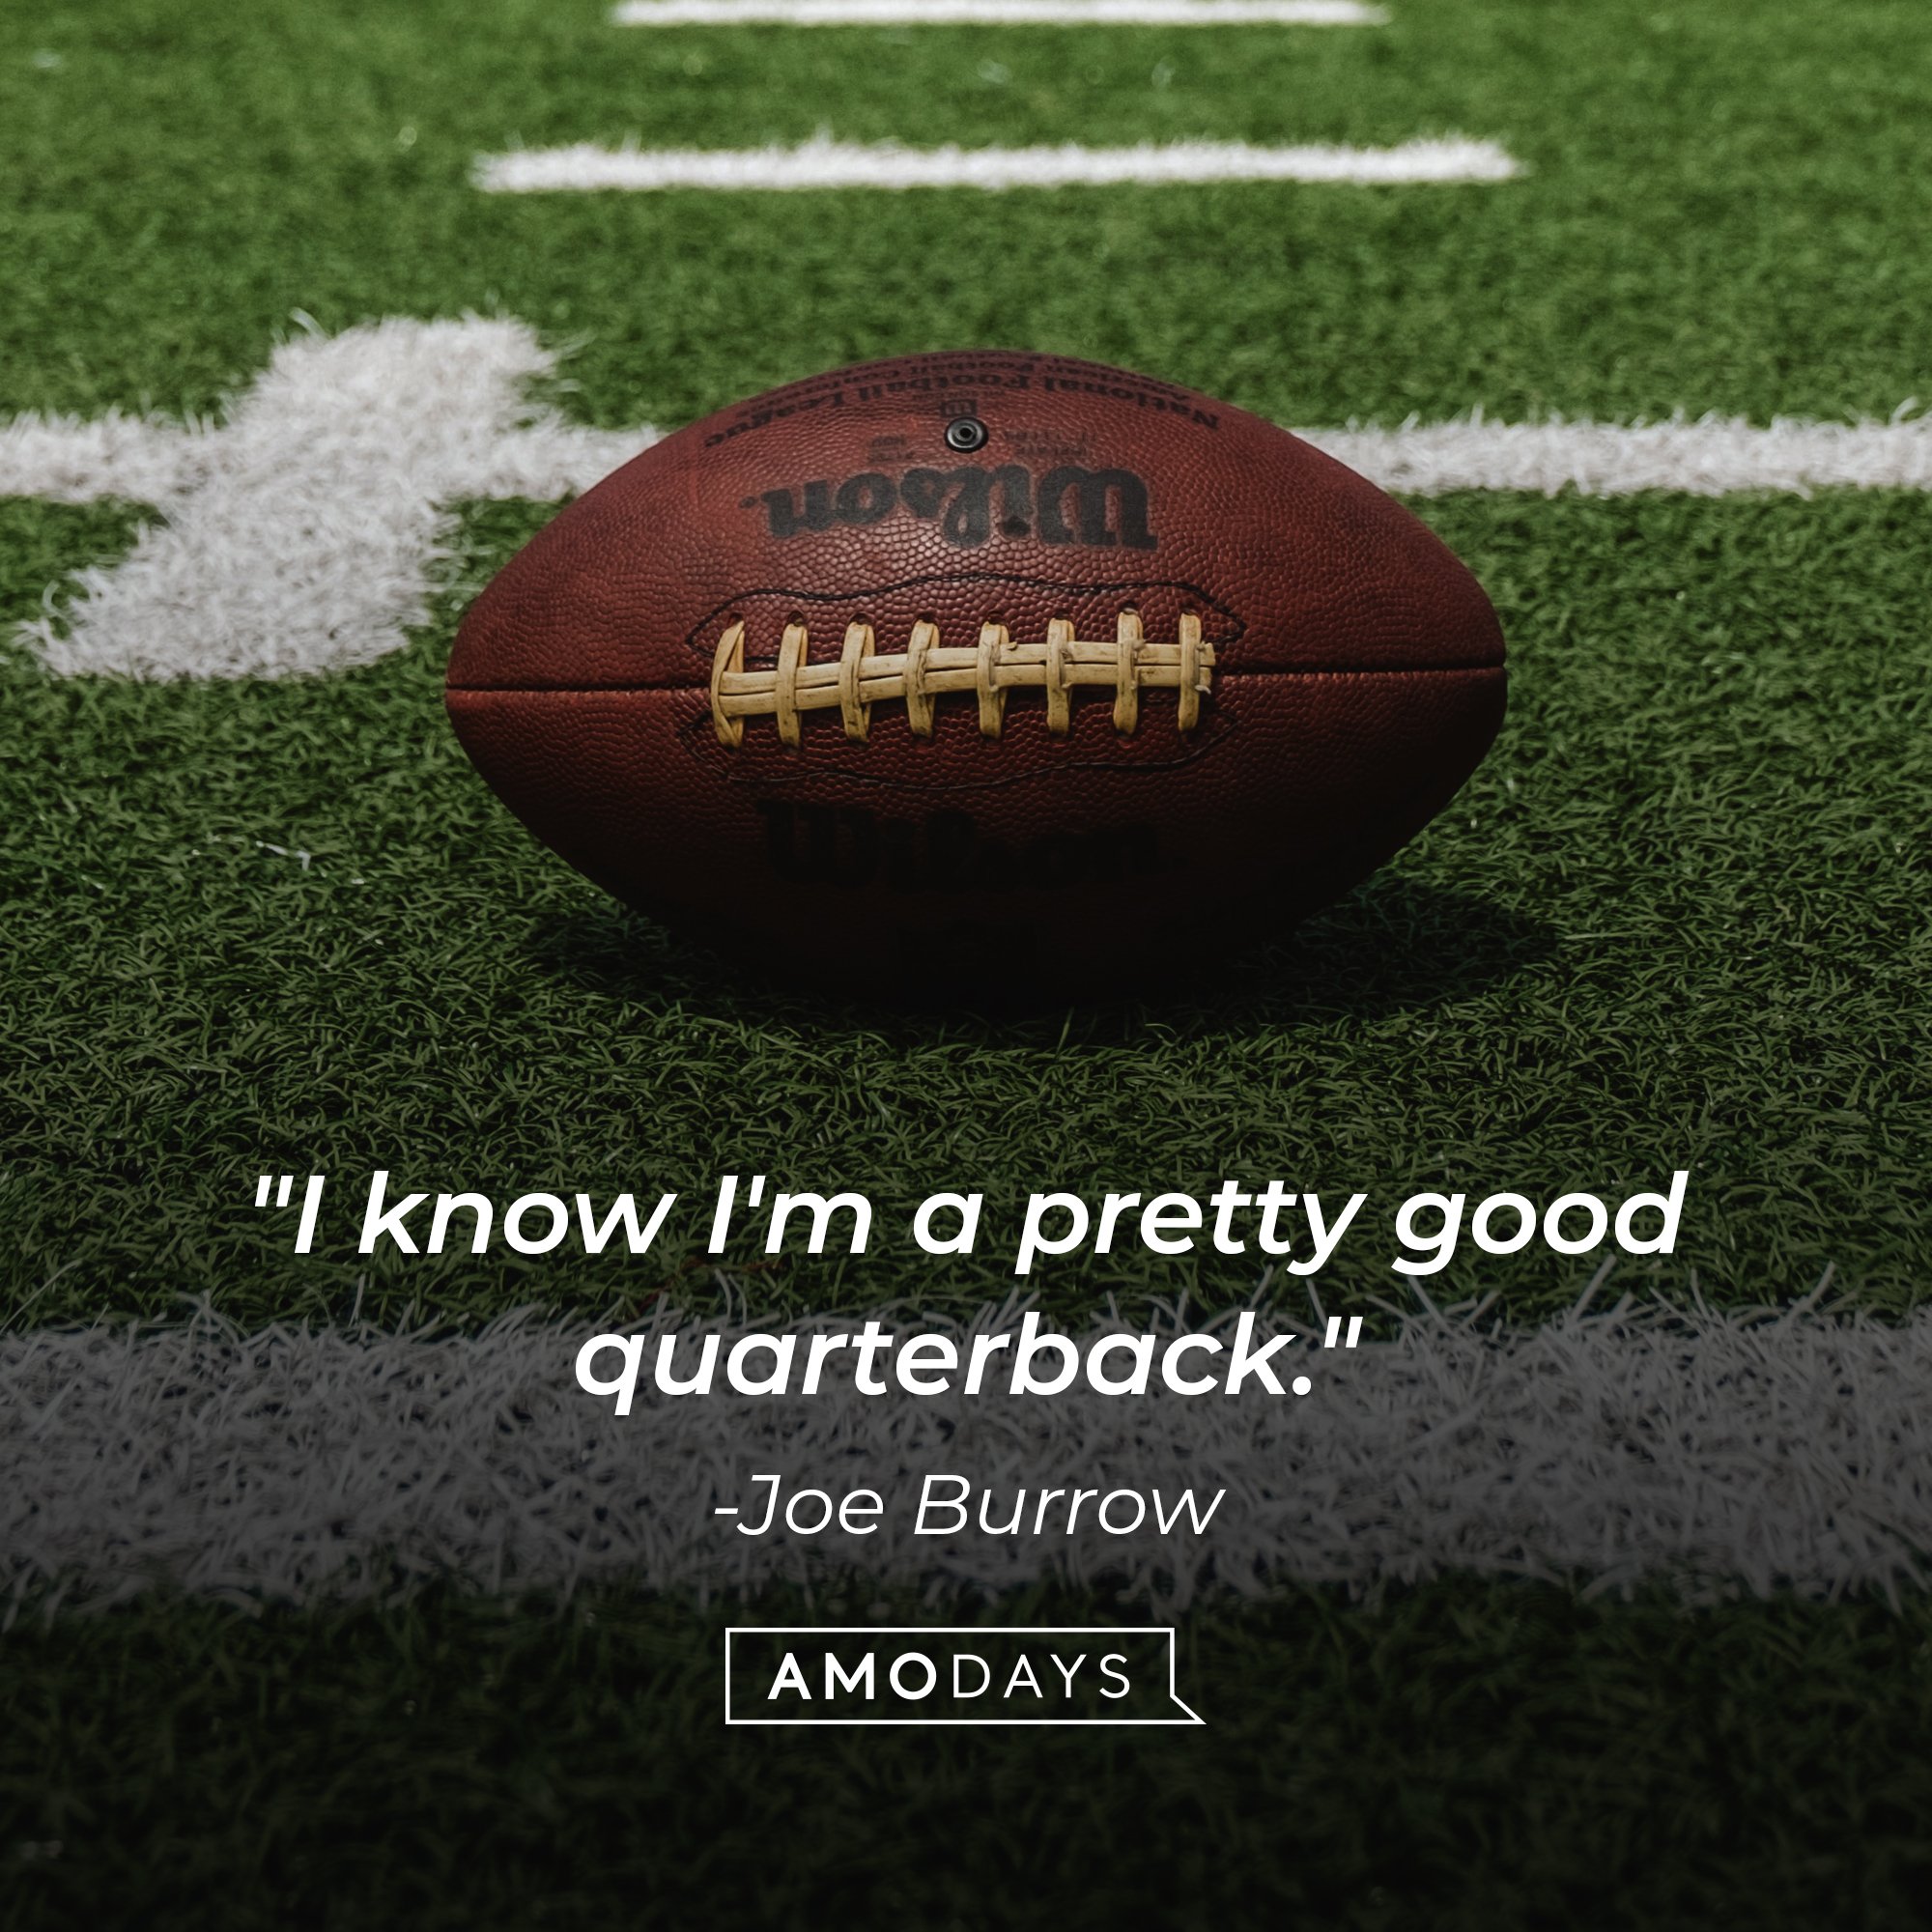  Joe Burrow's quote: "I know I'm a pretty good quarterback." | Image: AmoDays